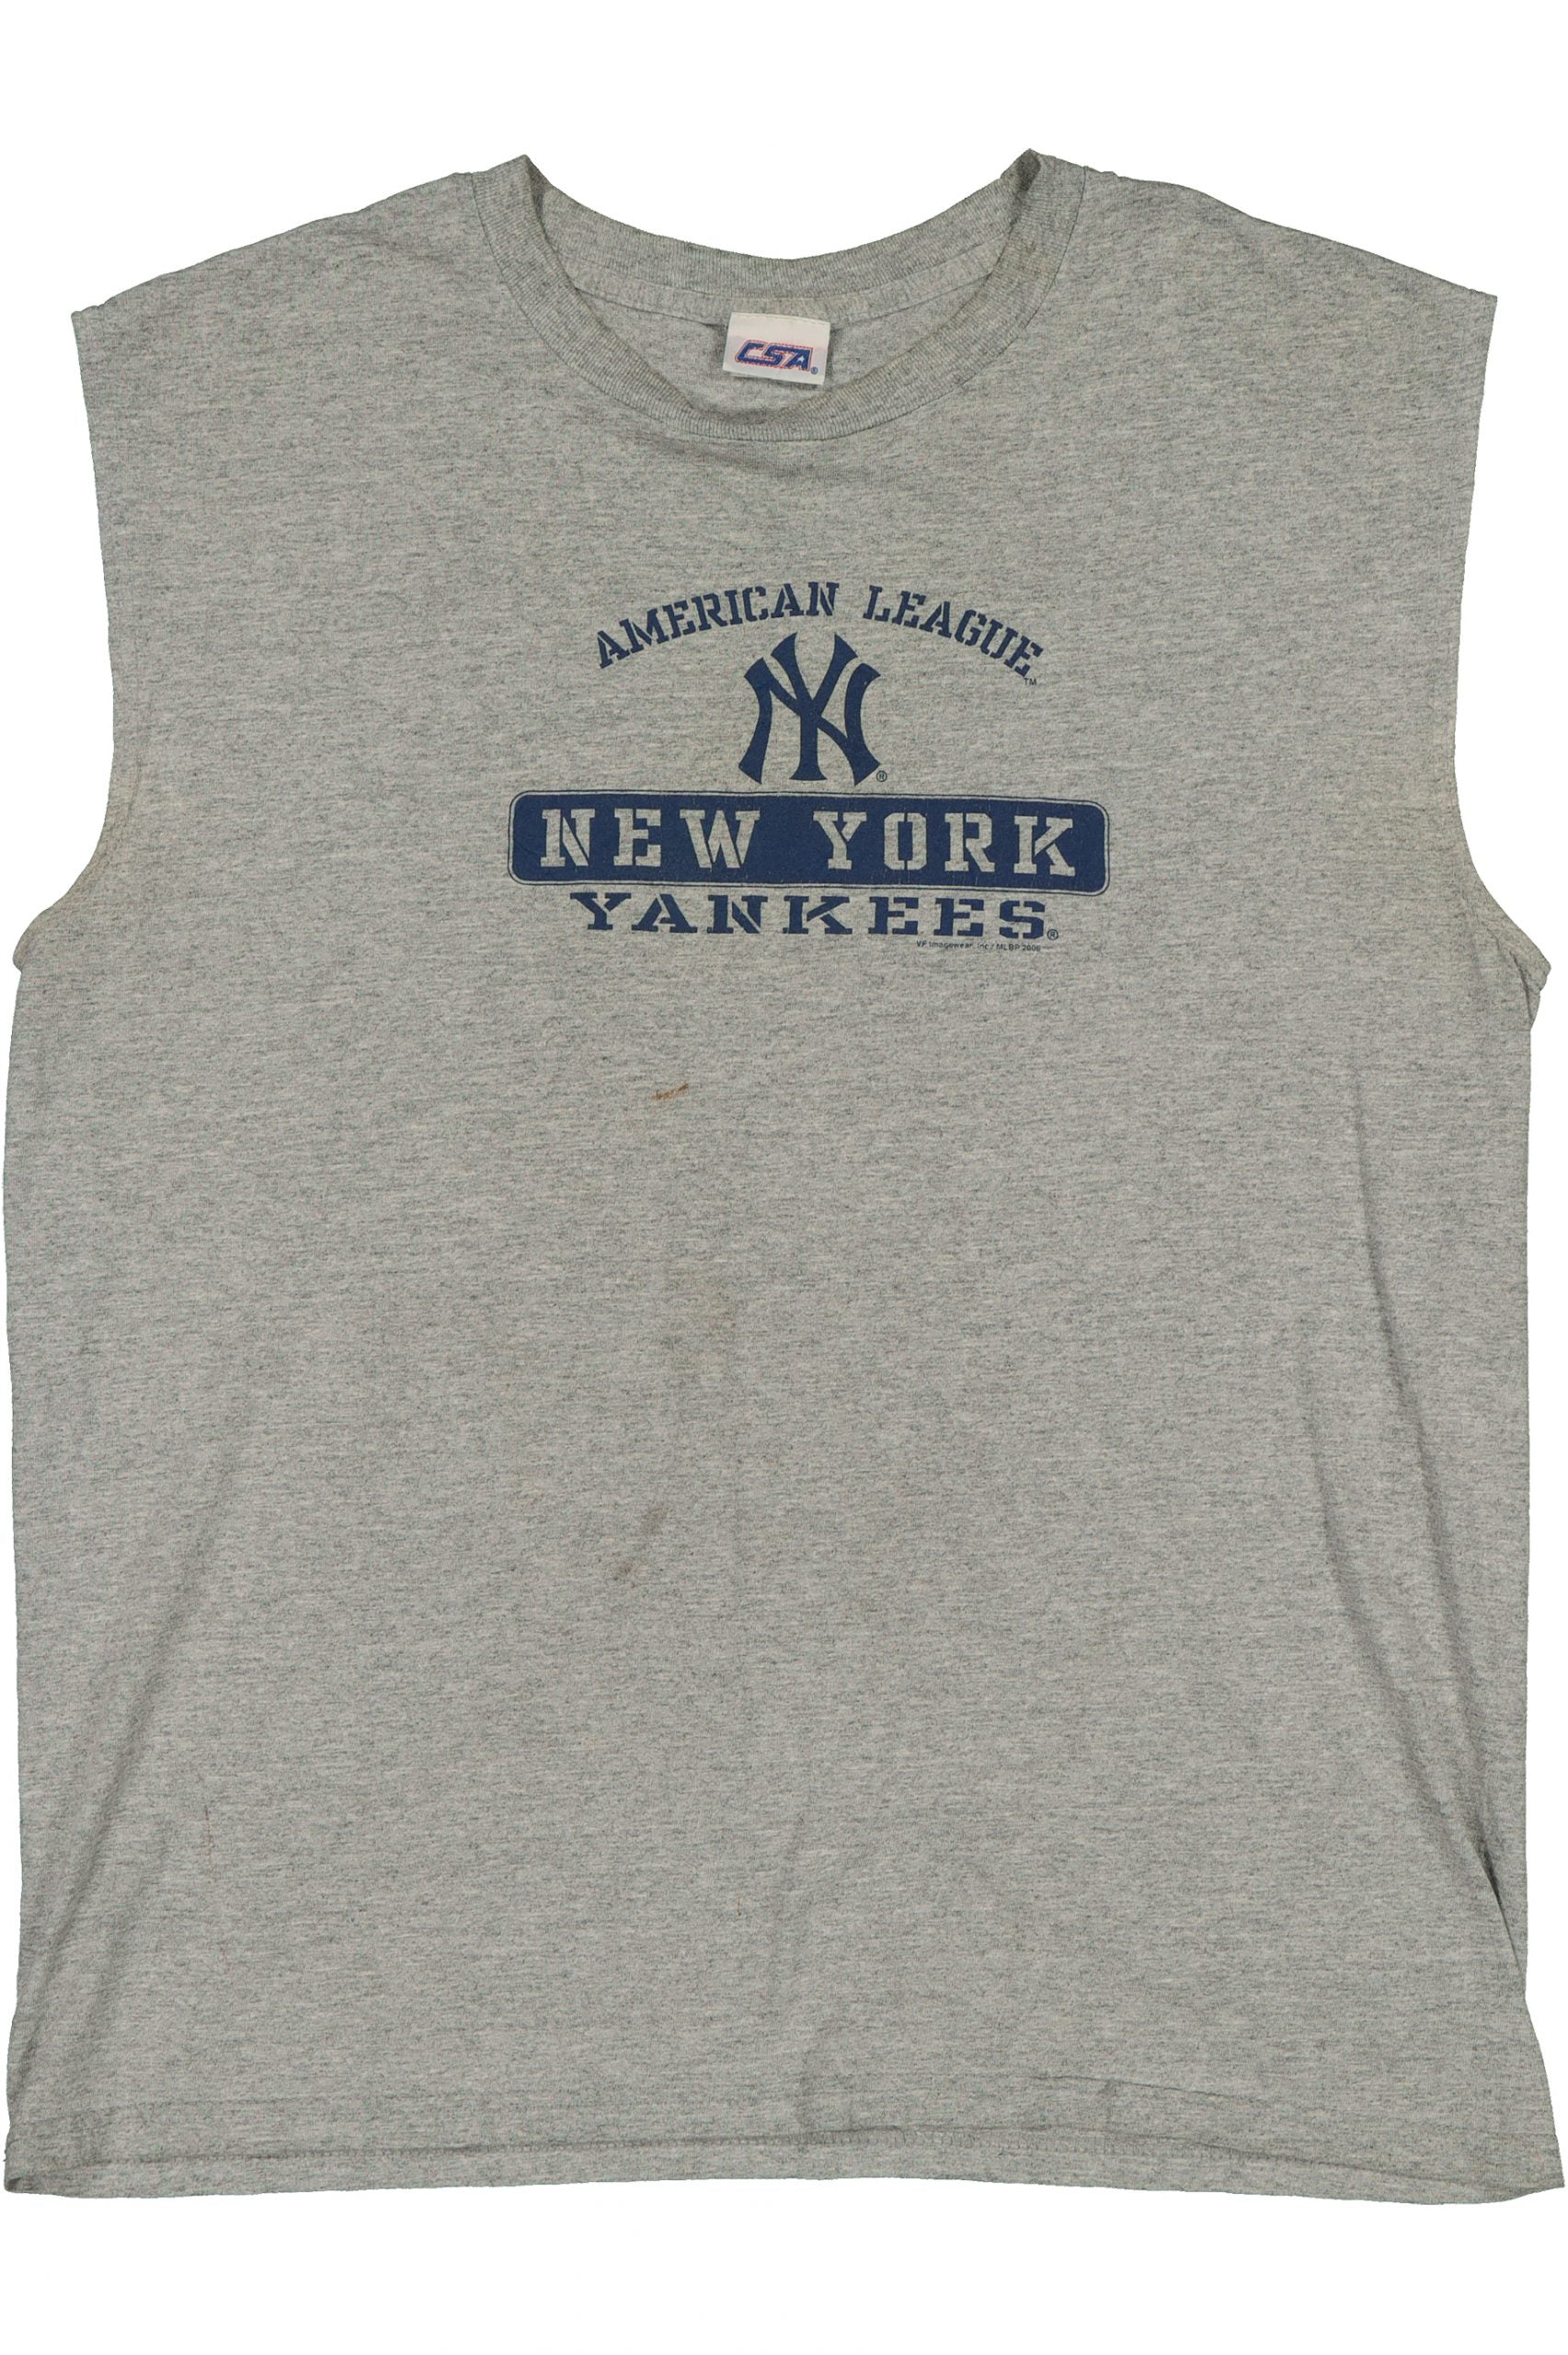 Vintage LA Sports Tshirt - Large